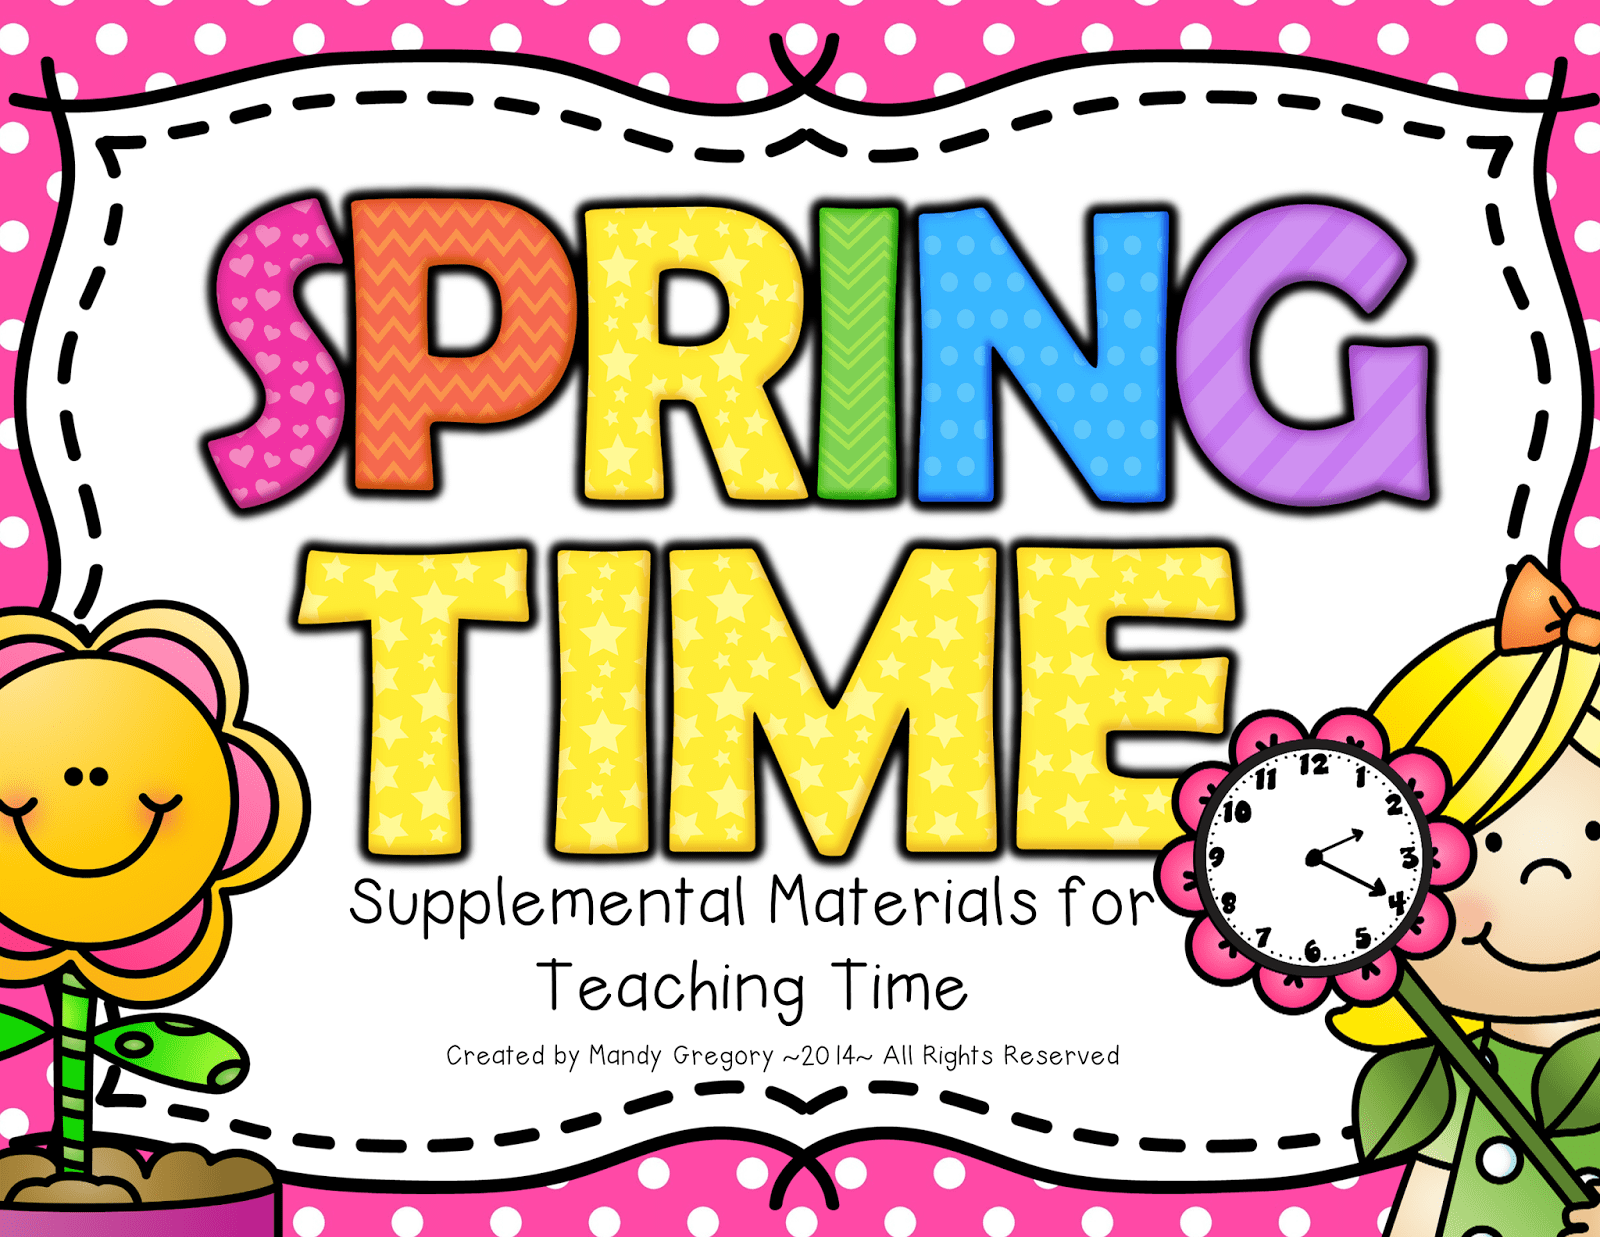 https://www.teacherspayteachers.com/Product/Spring-Time-Supplemental-Materials-for-Teaching-Time-1188352